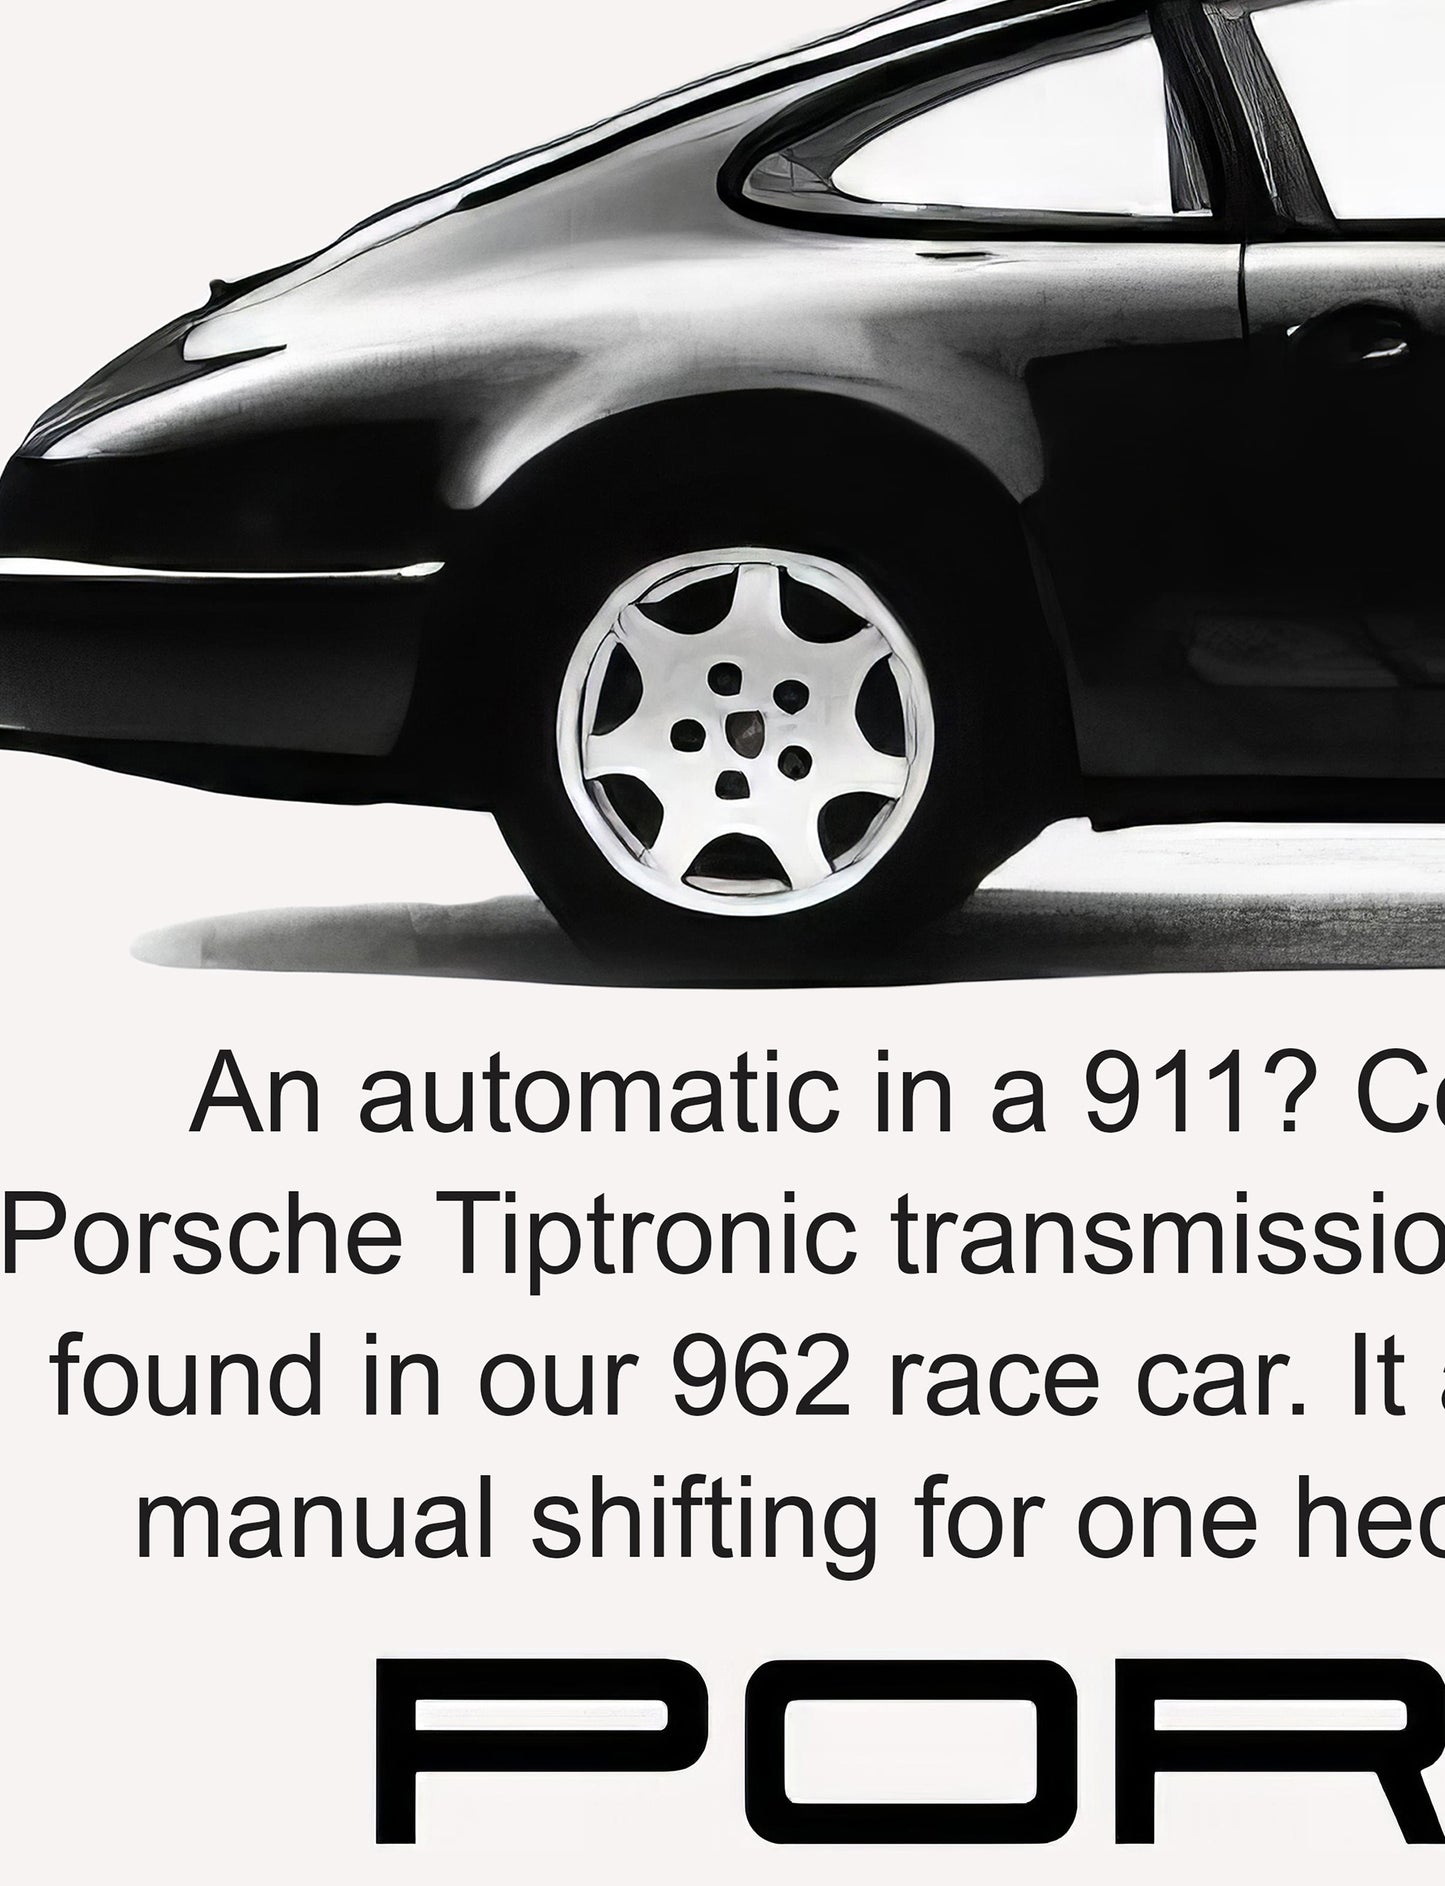 Porsche "No Clutch, But One Heck Of An Accelerator" Poster